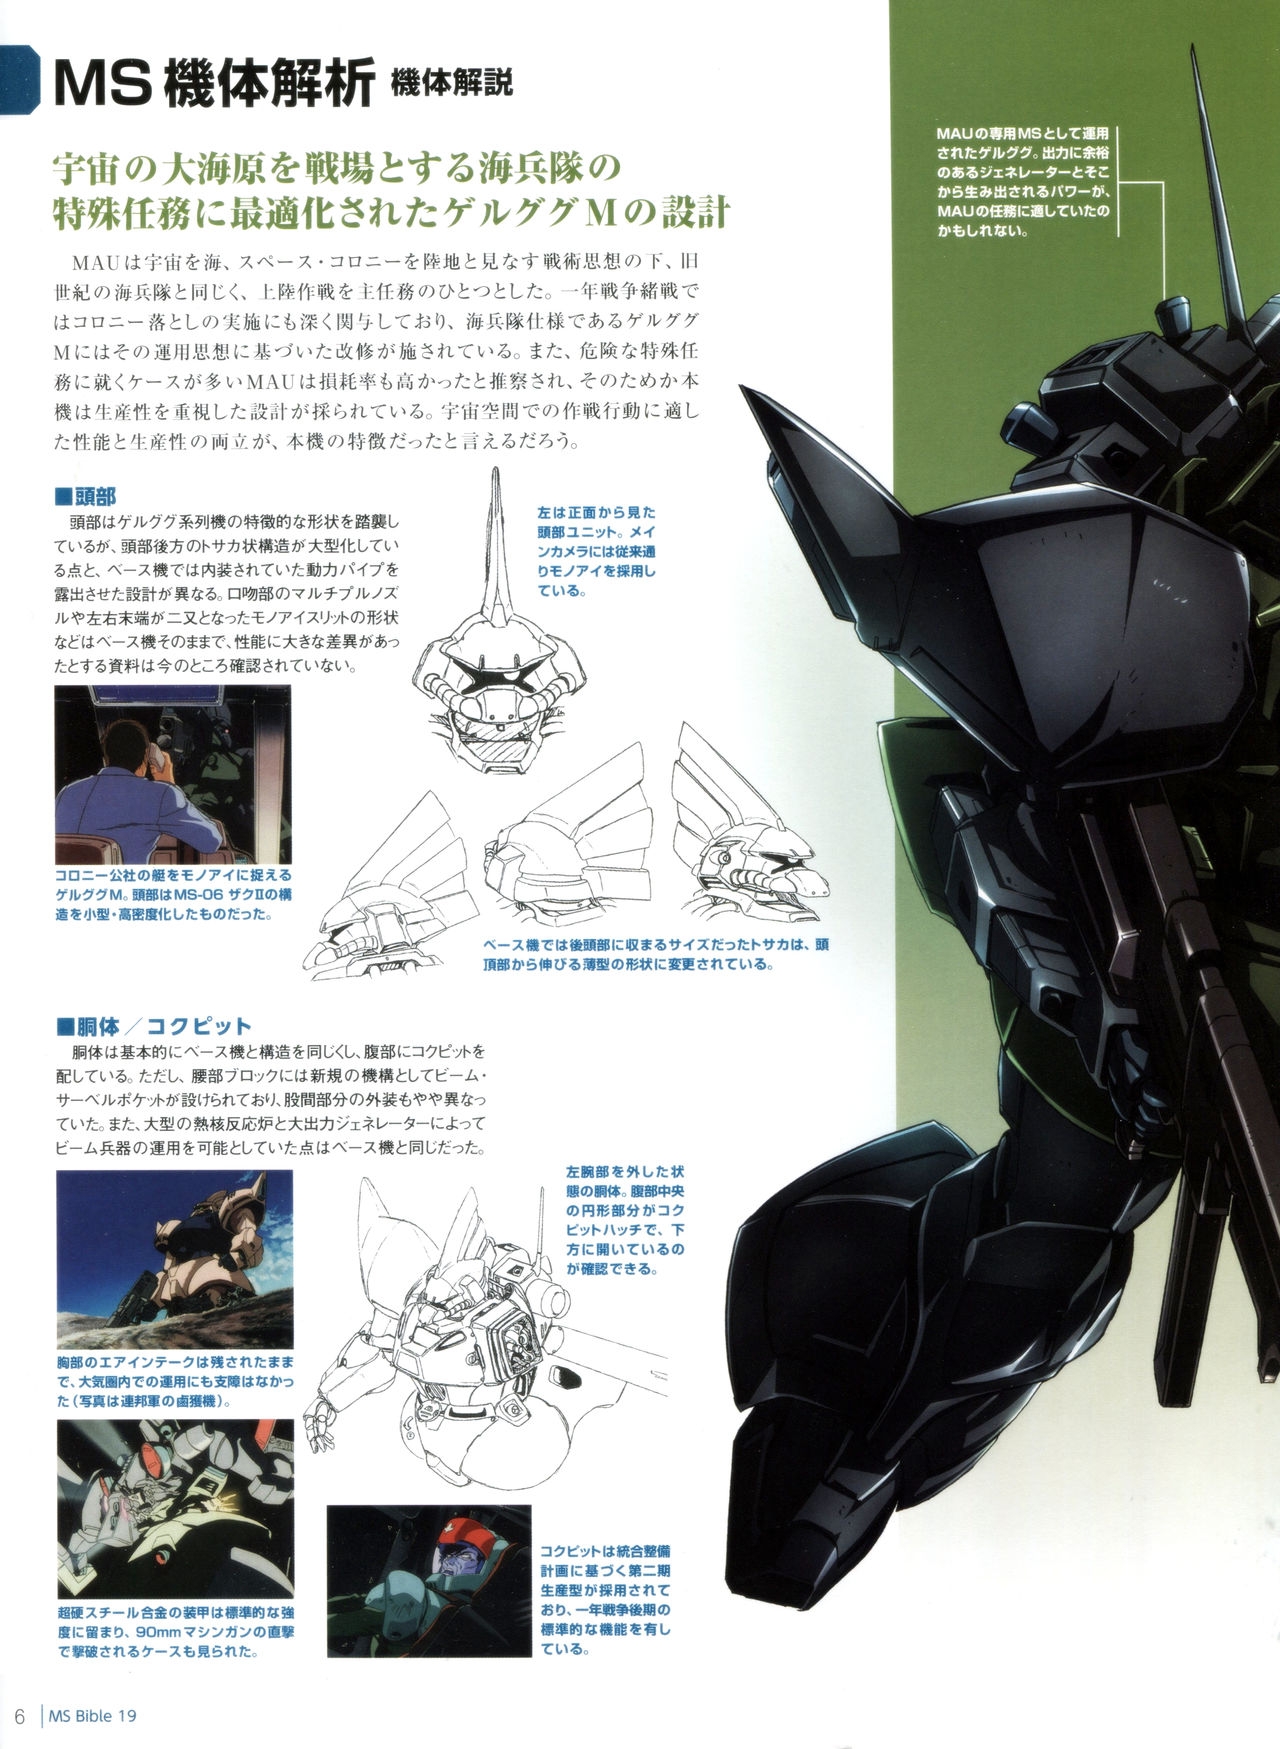 Gundam Mobile Suit Bible 19 7